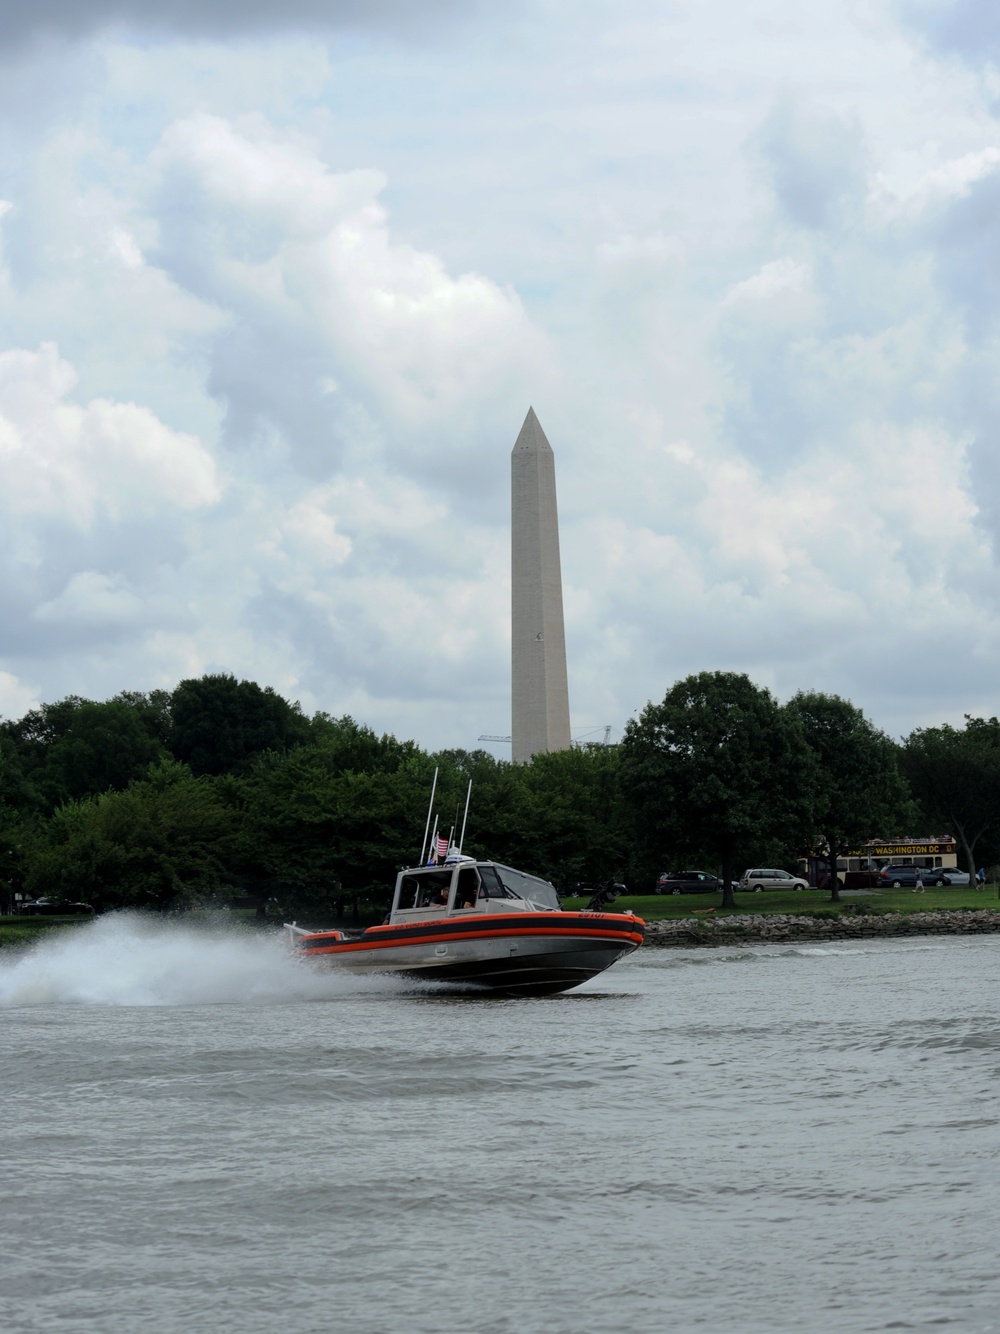 Coast Guard Station Washington reserve members patrol the capitol-region waterways